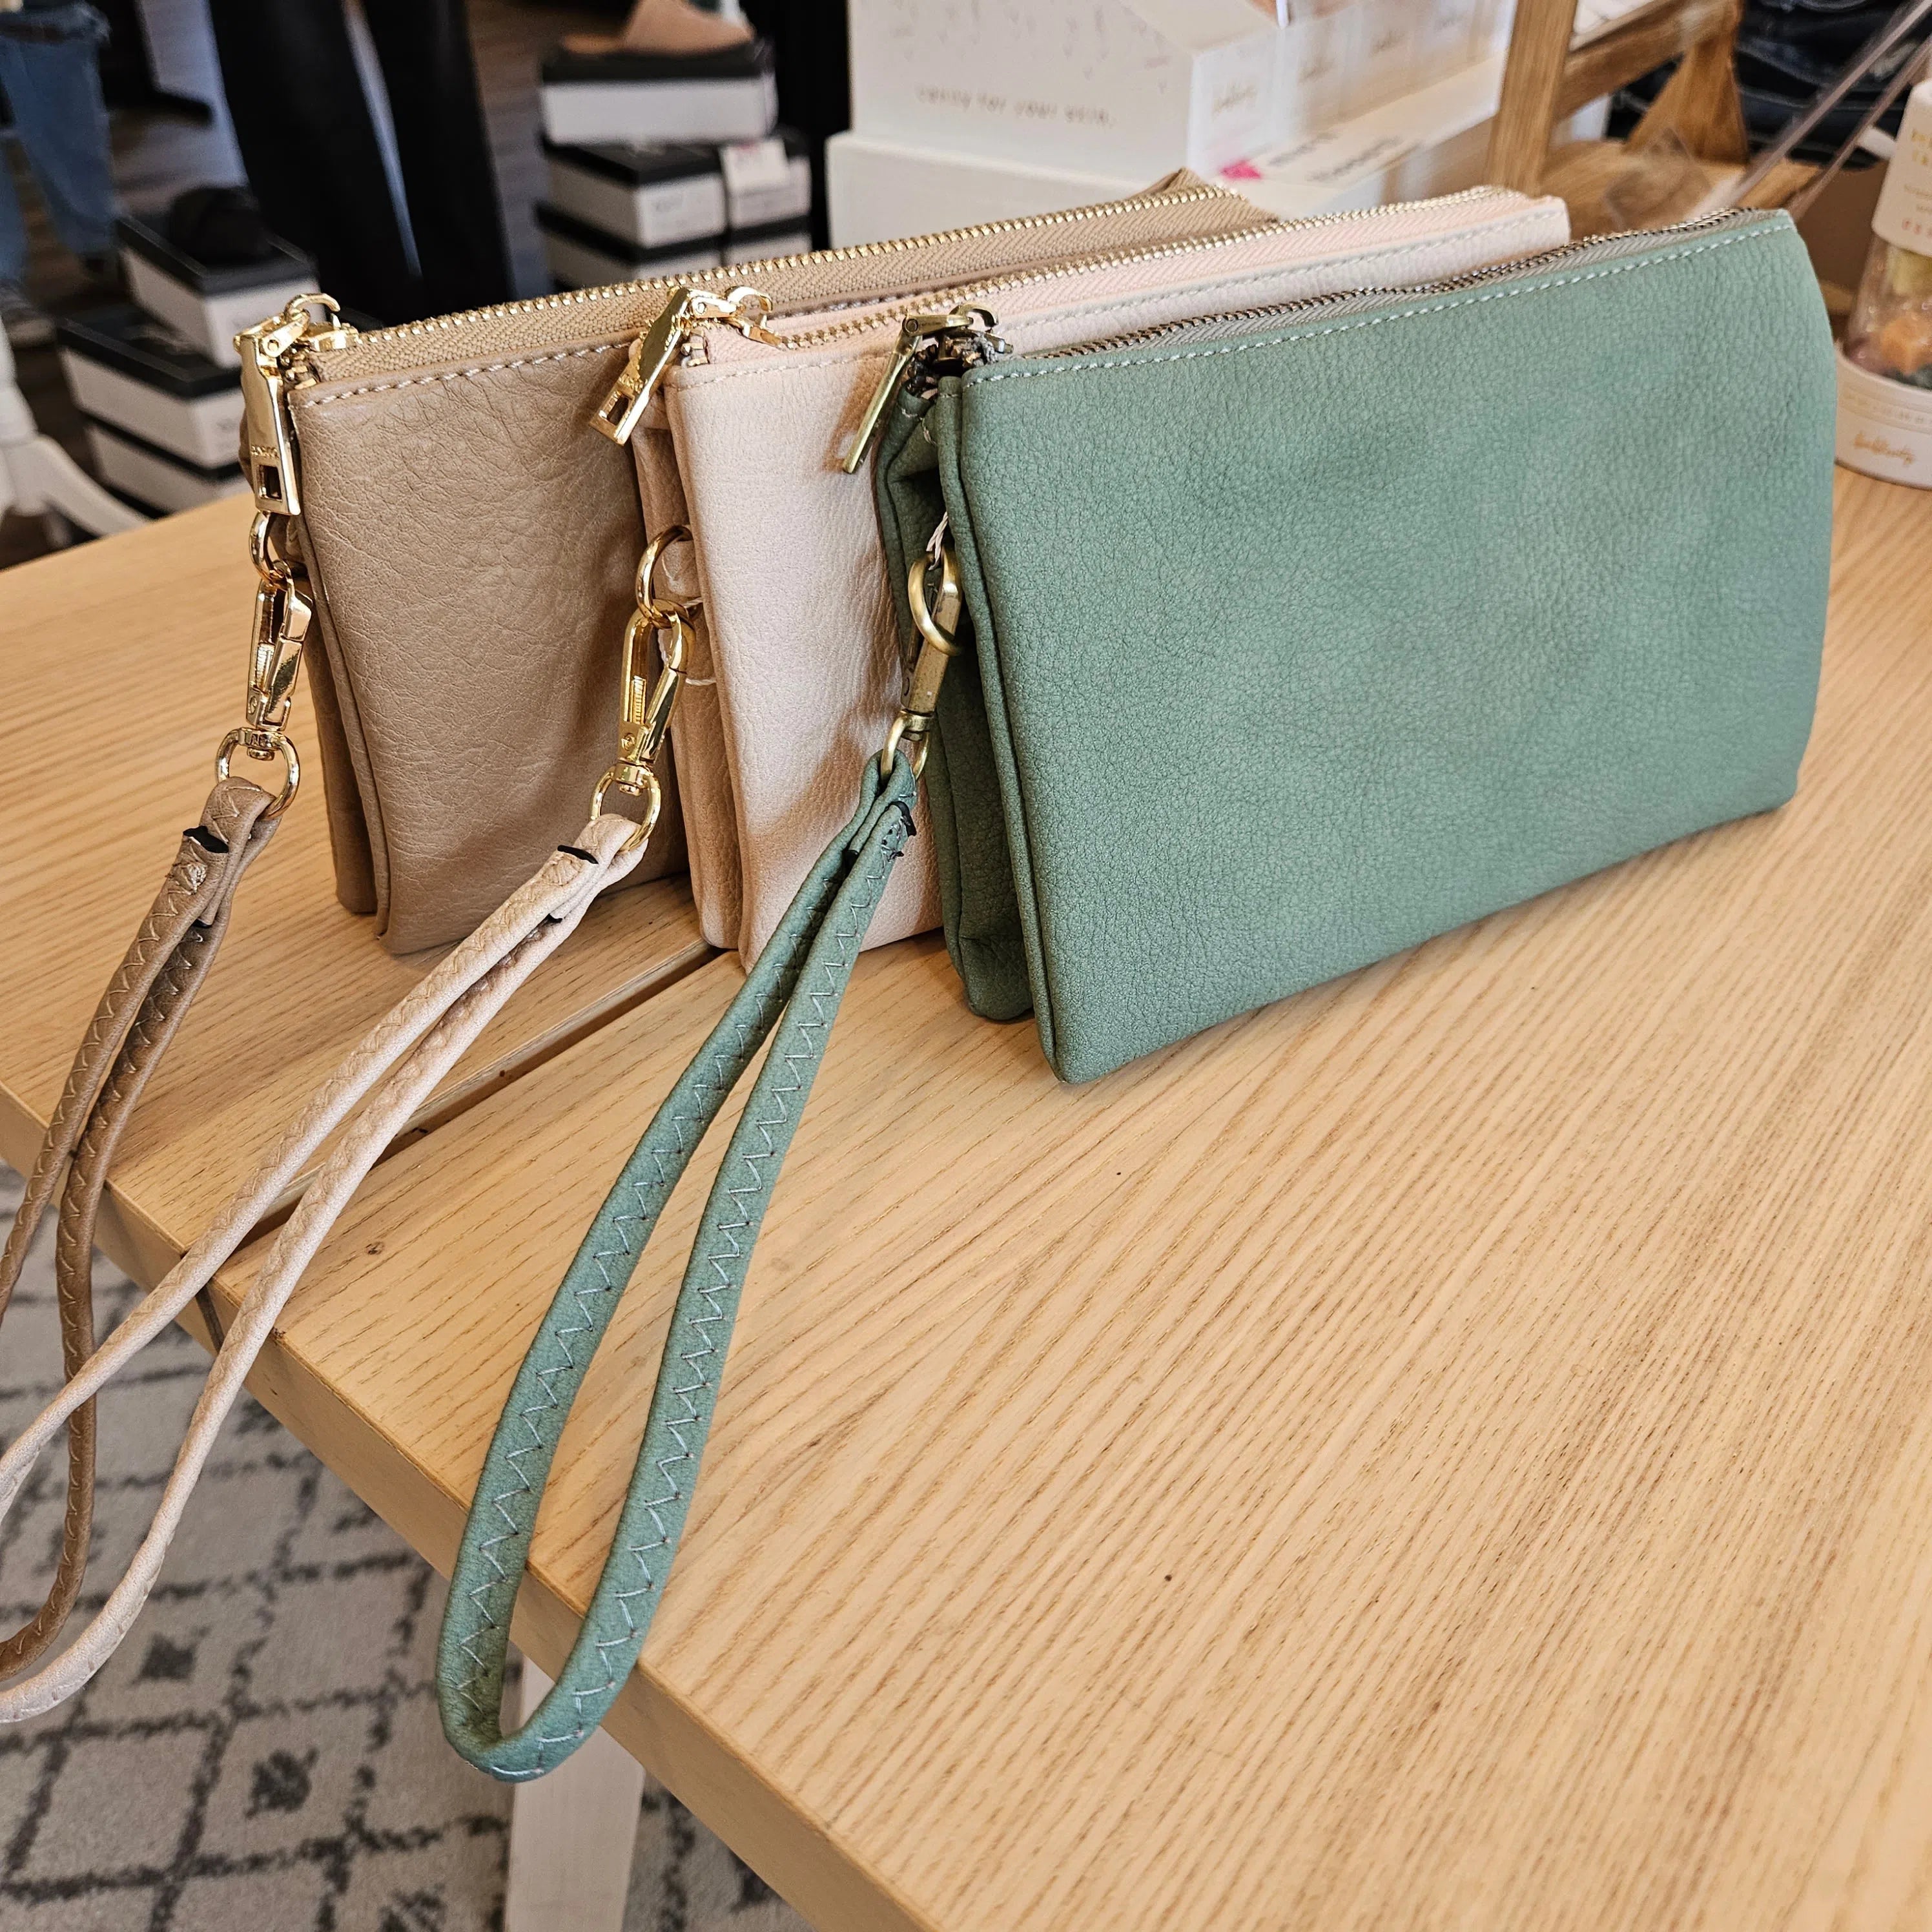 Buy SULCET Canvas Handbag for Women Cloth Tote Shoulder Purses Hobo Casual  Crossbody Bag Large Top Handle Shopper Bag at Amazon.in